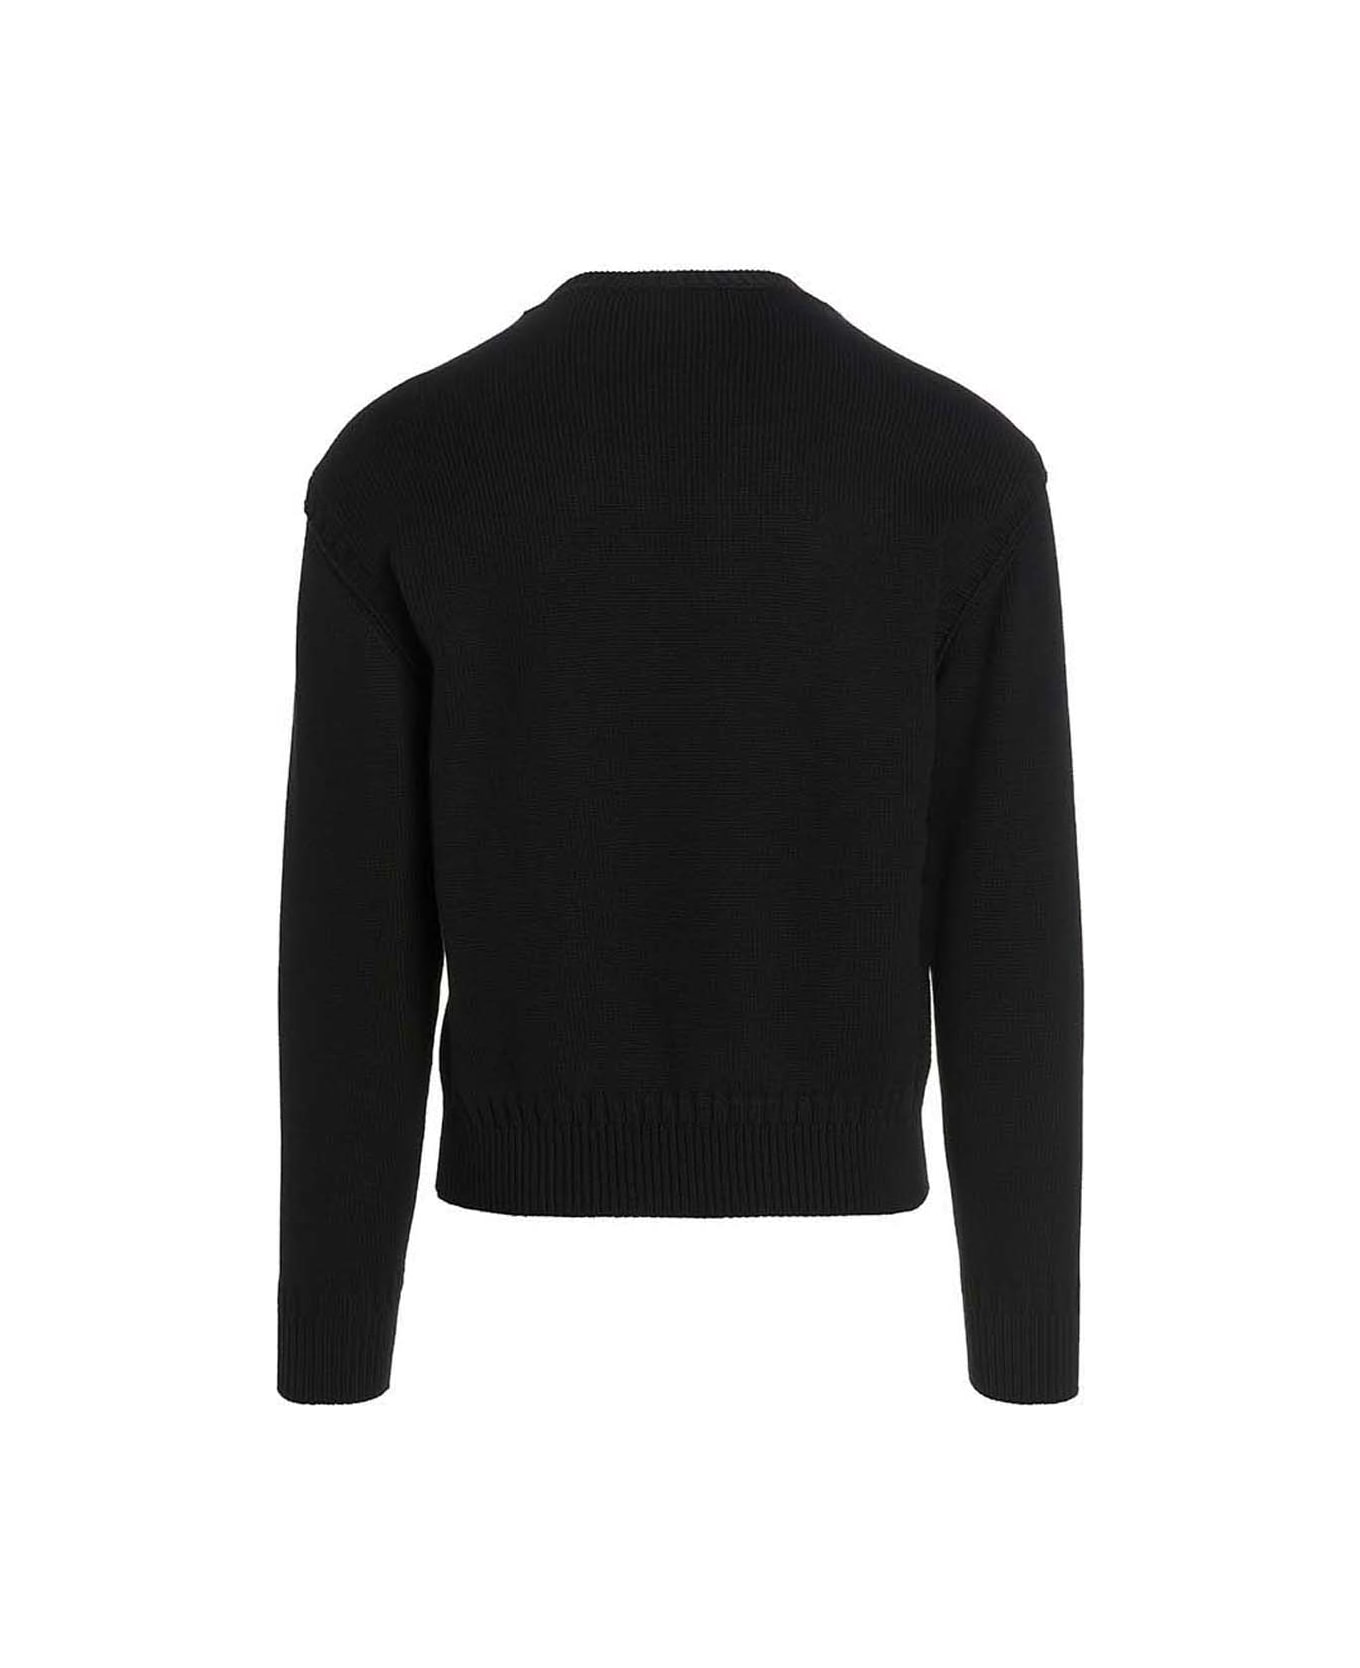 Alexander McQueen Logo Sweater - Black   ニットウェア